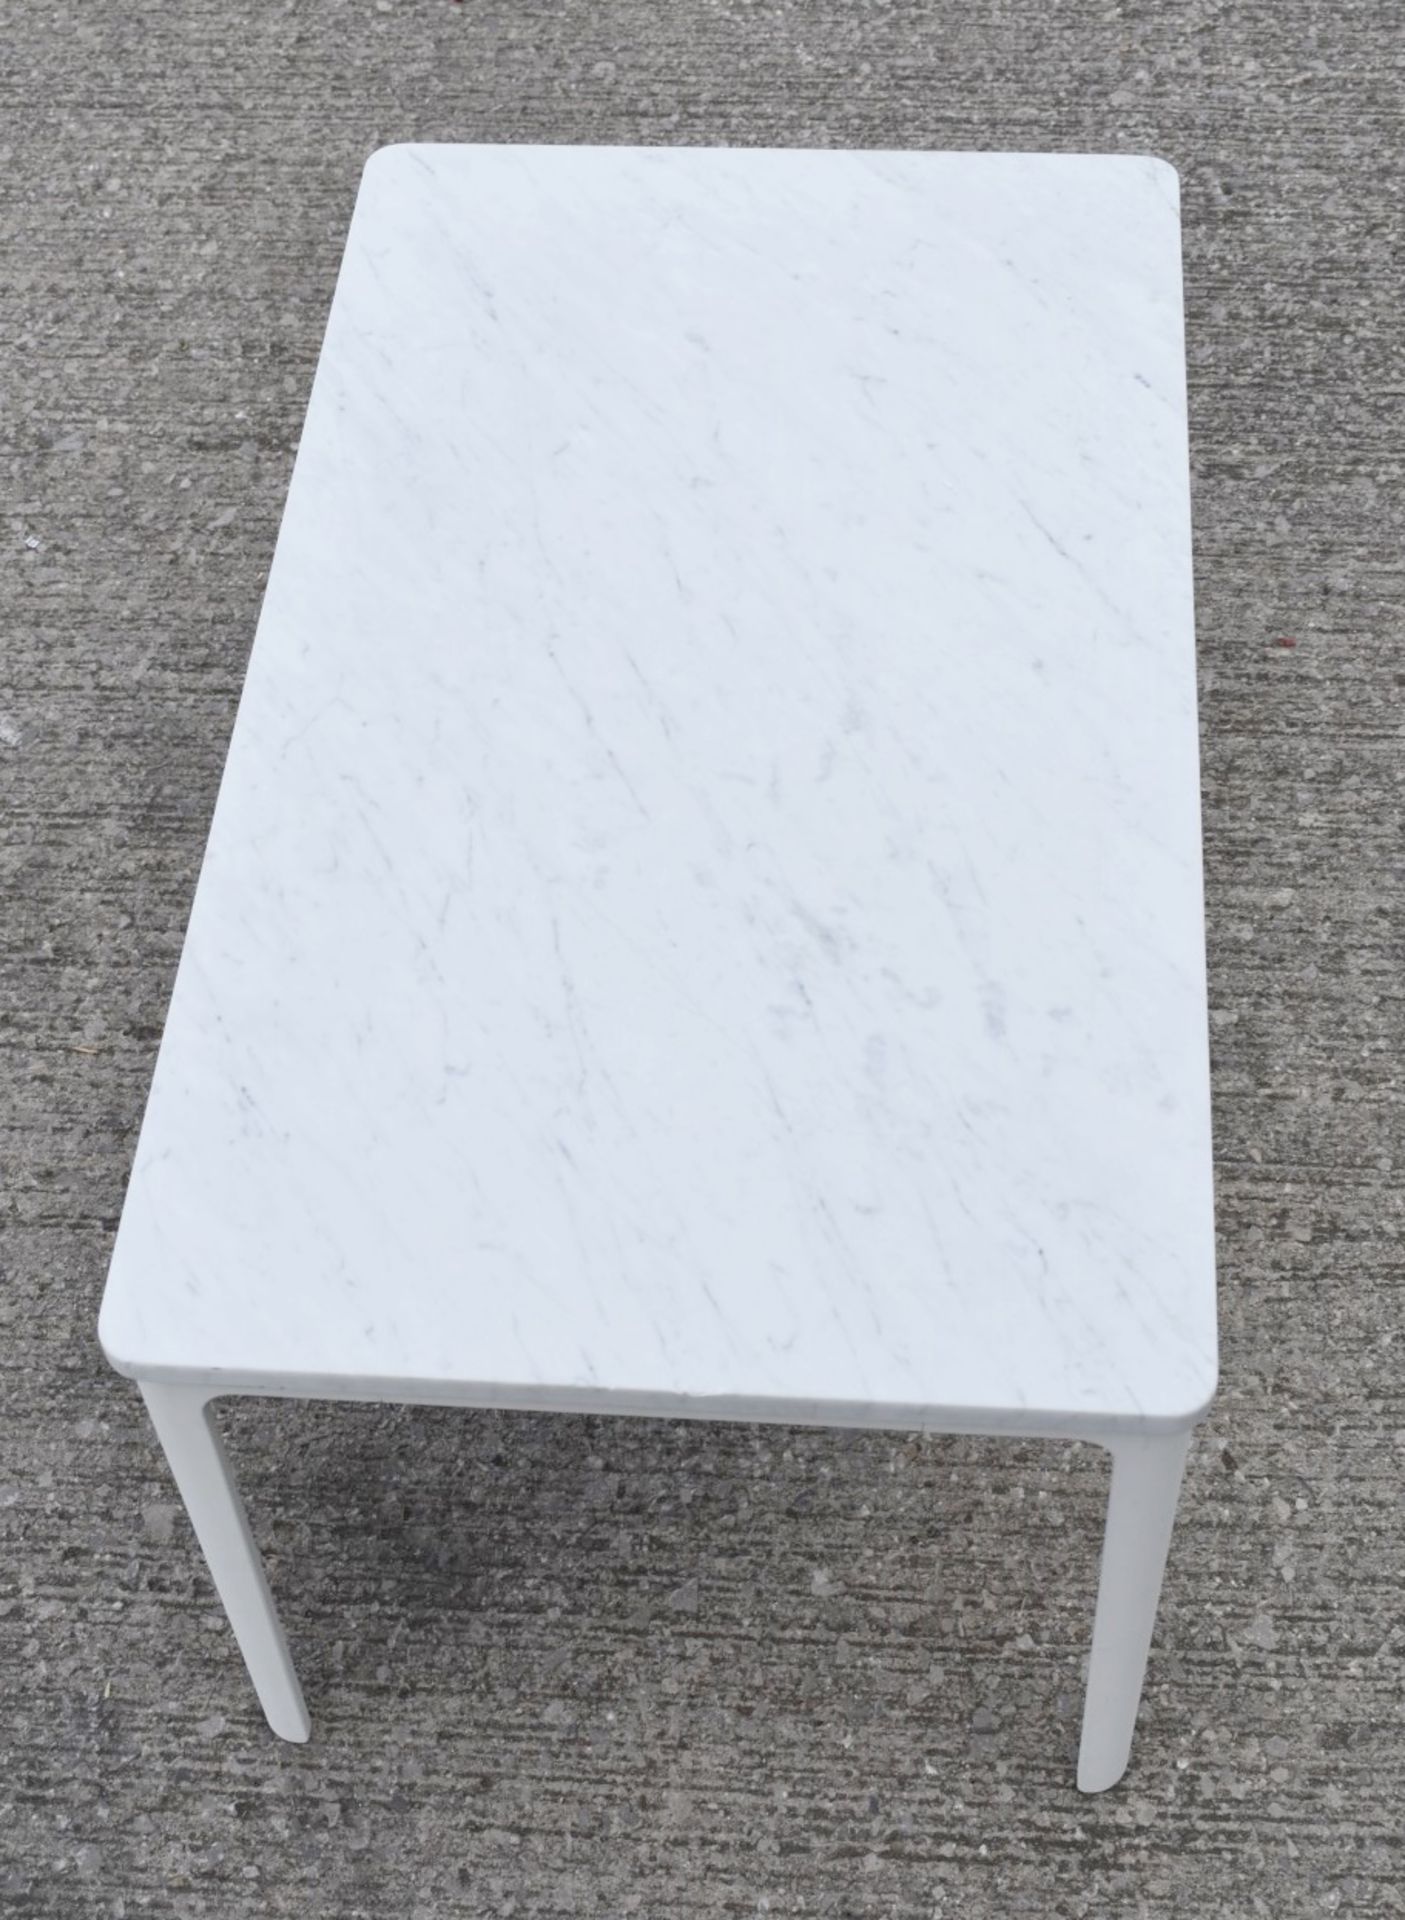 1 x VITRA / JASPER MORRISON 'Plate' Designer Italian Carrara Marble Topped Coffee Table - RRP £1,359 - Image 3 of 11